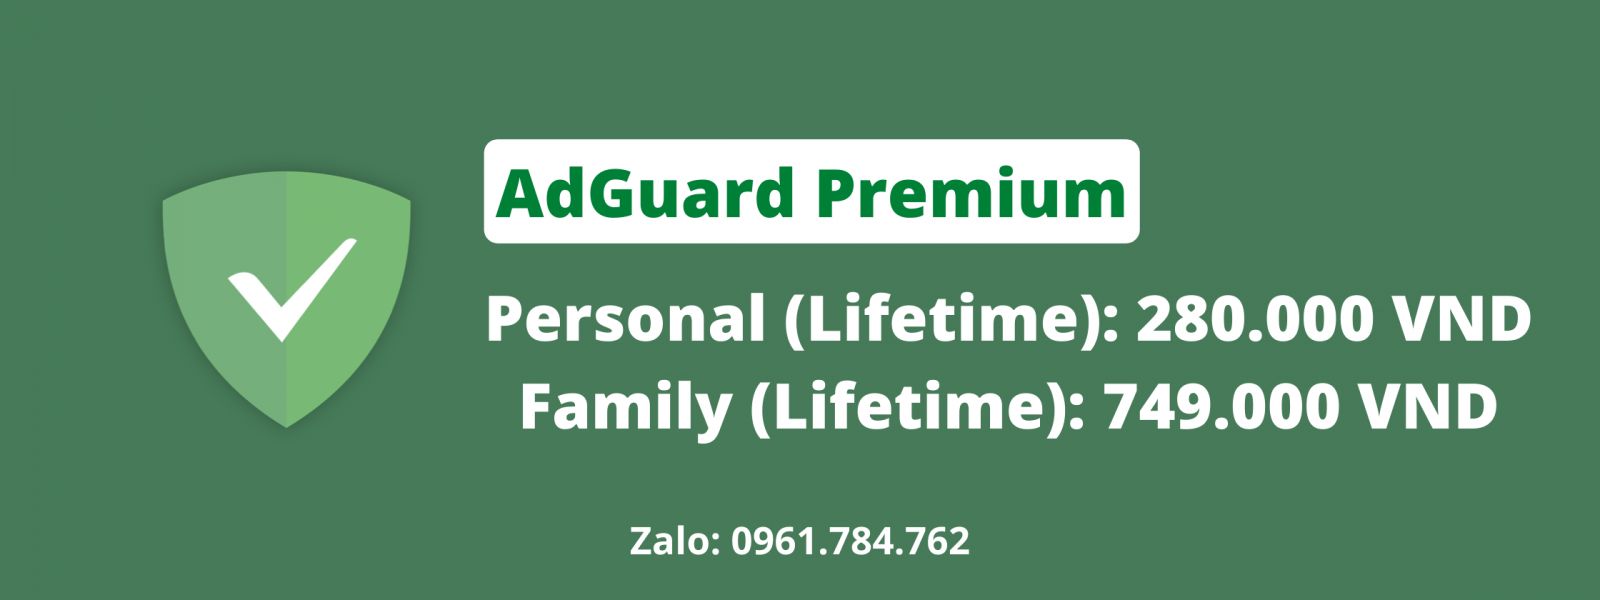 AdGuard Premium.png